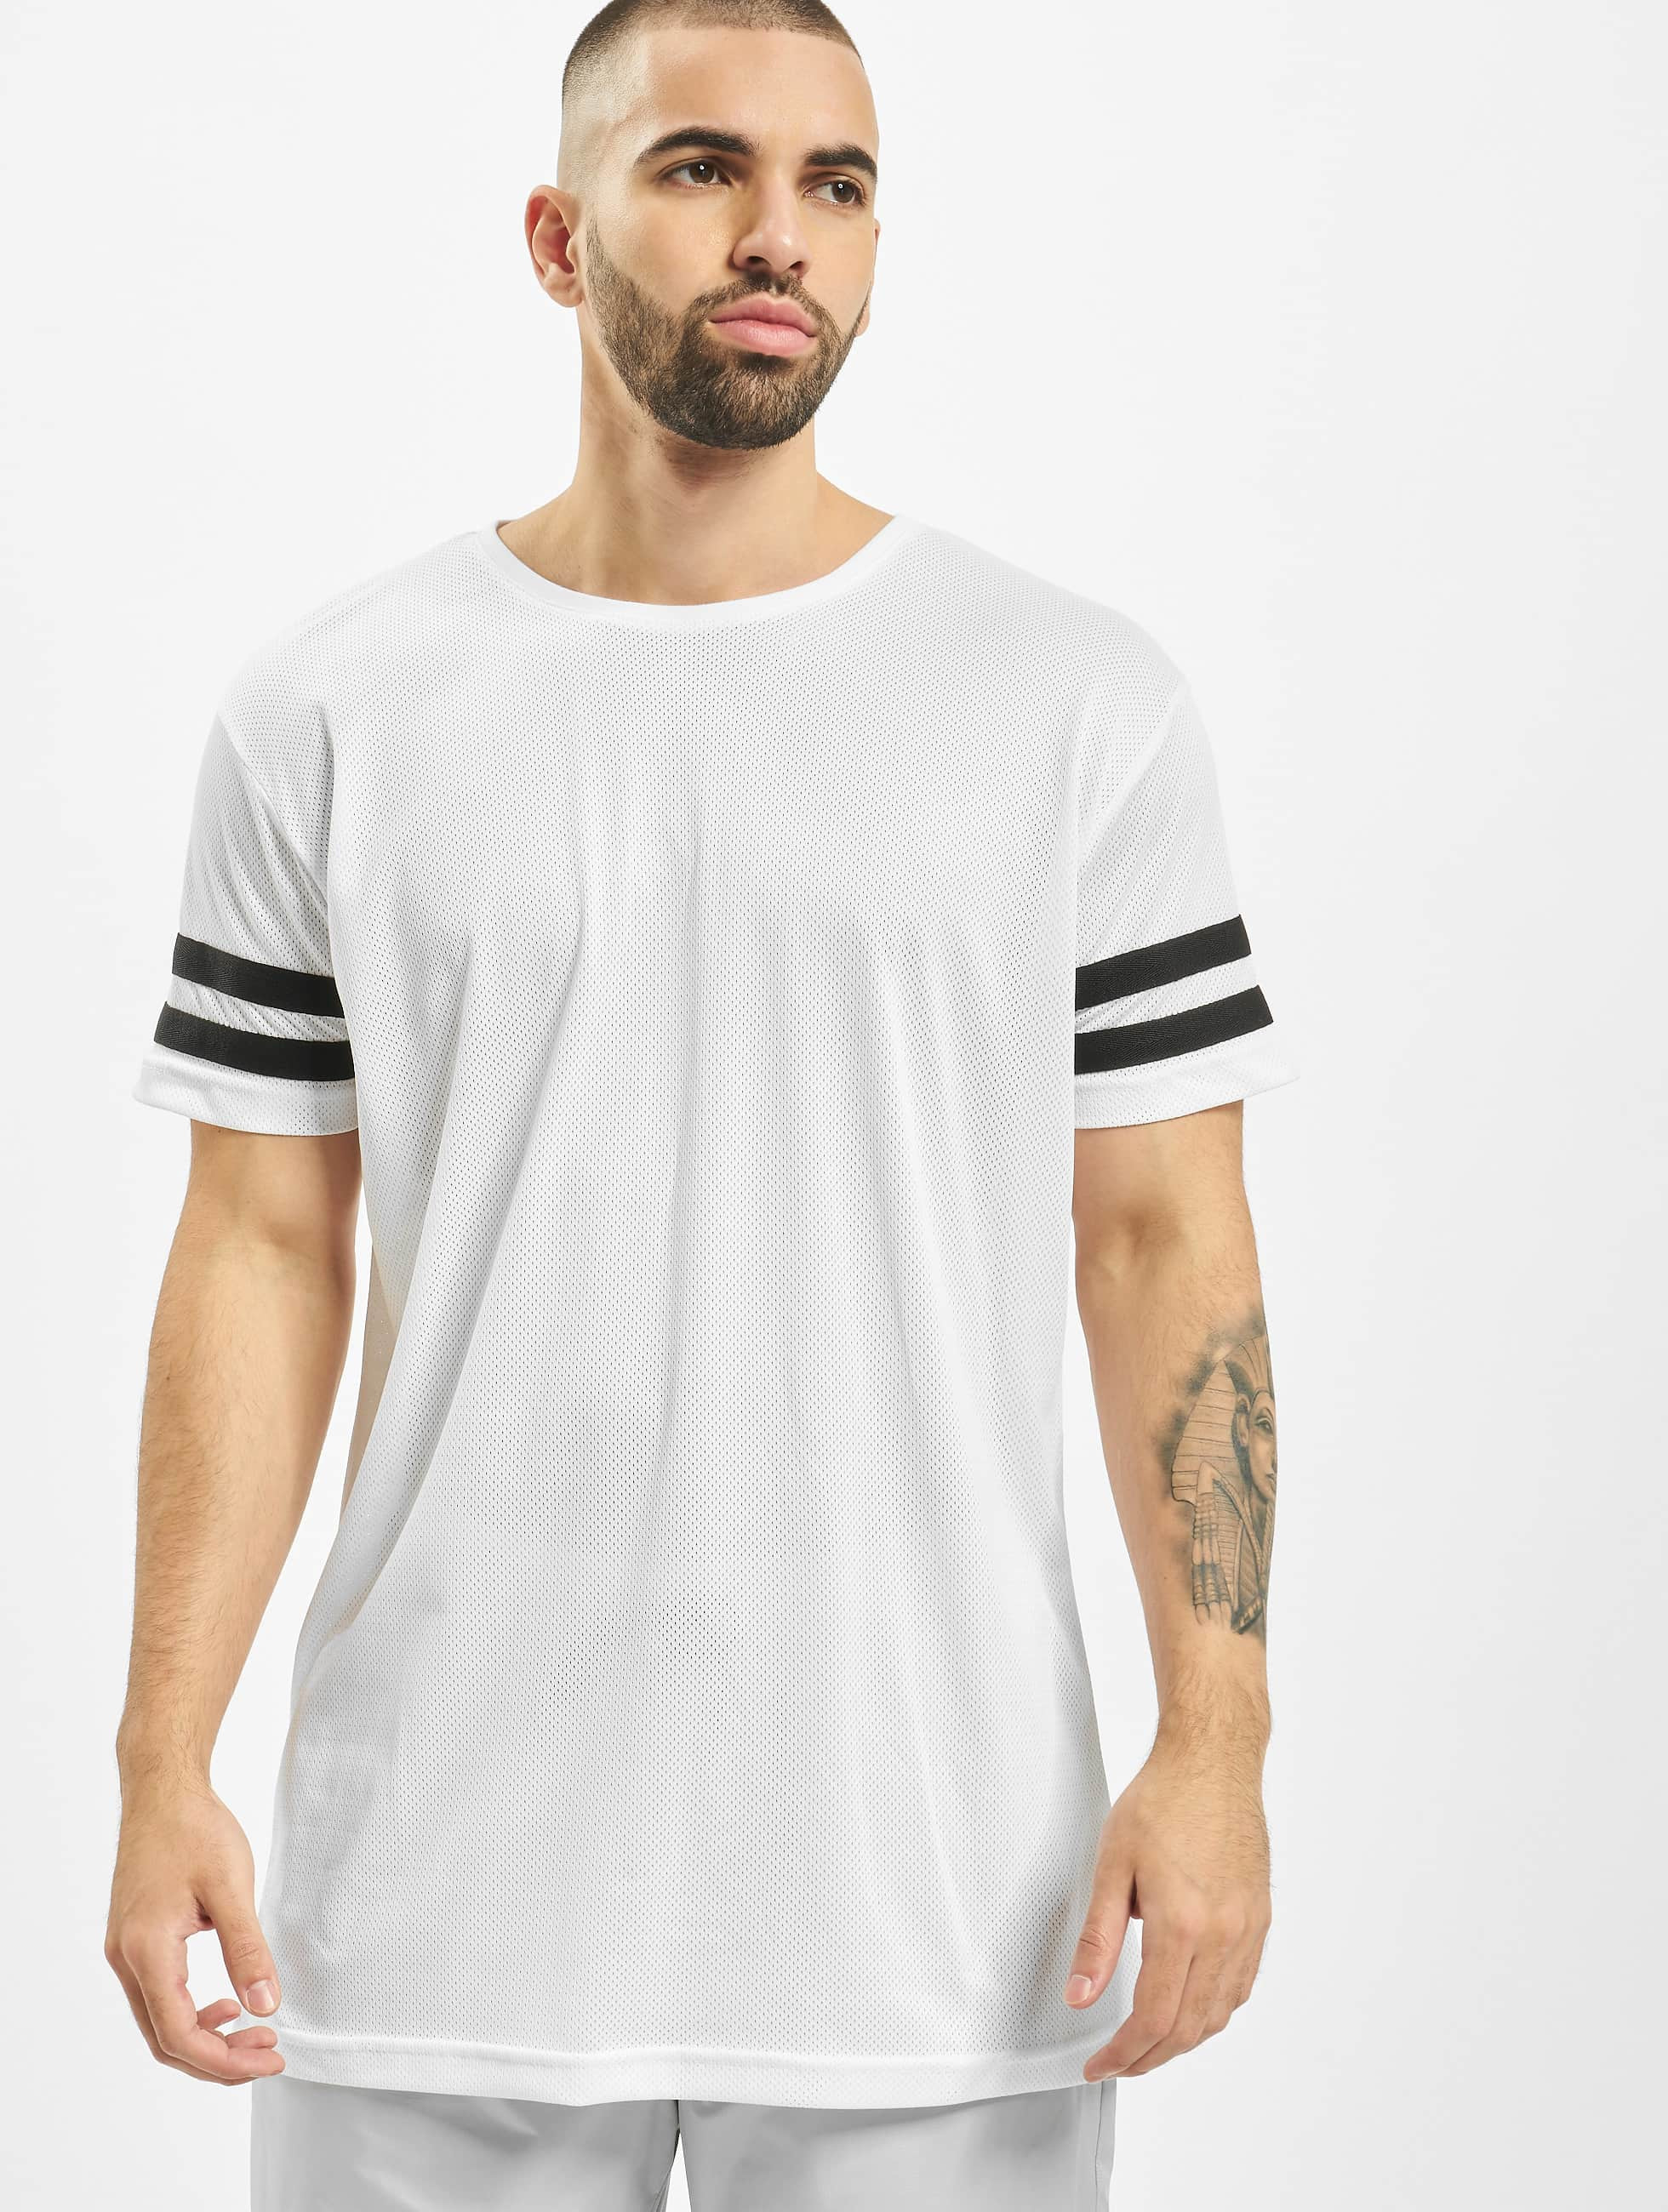 Urban Classics Stripe Mesh blanc T-Shirt homme